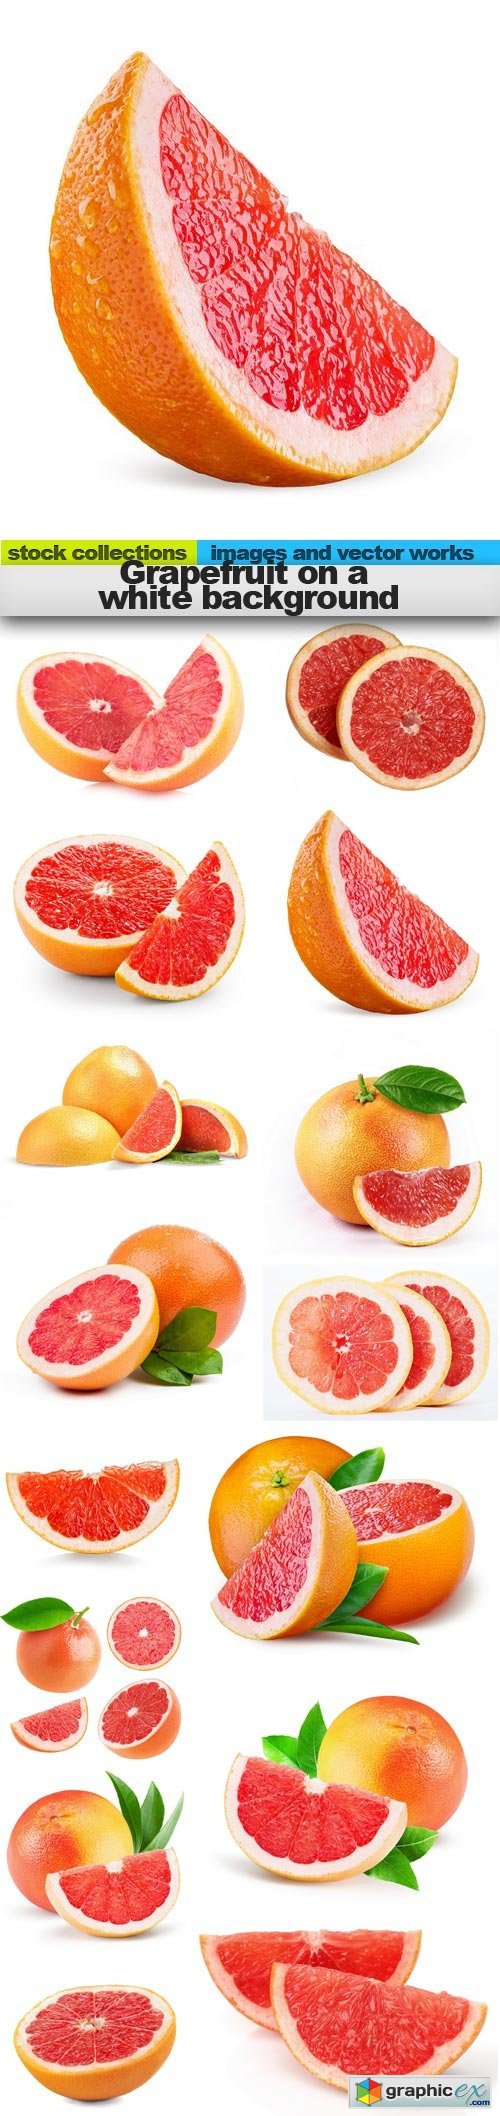 Grapefruit on a white background, 15 x UHQ JPEG